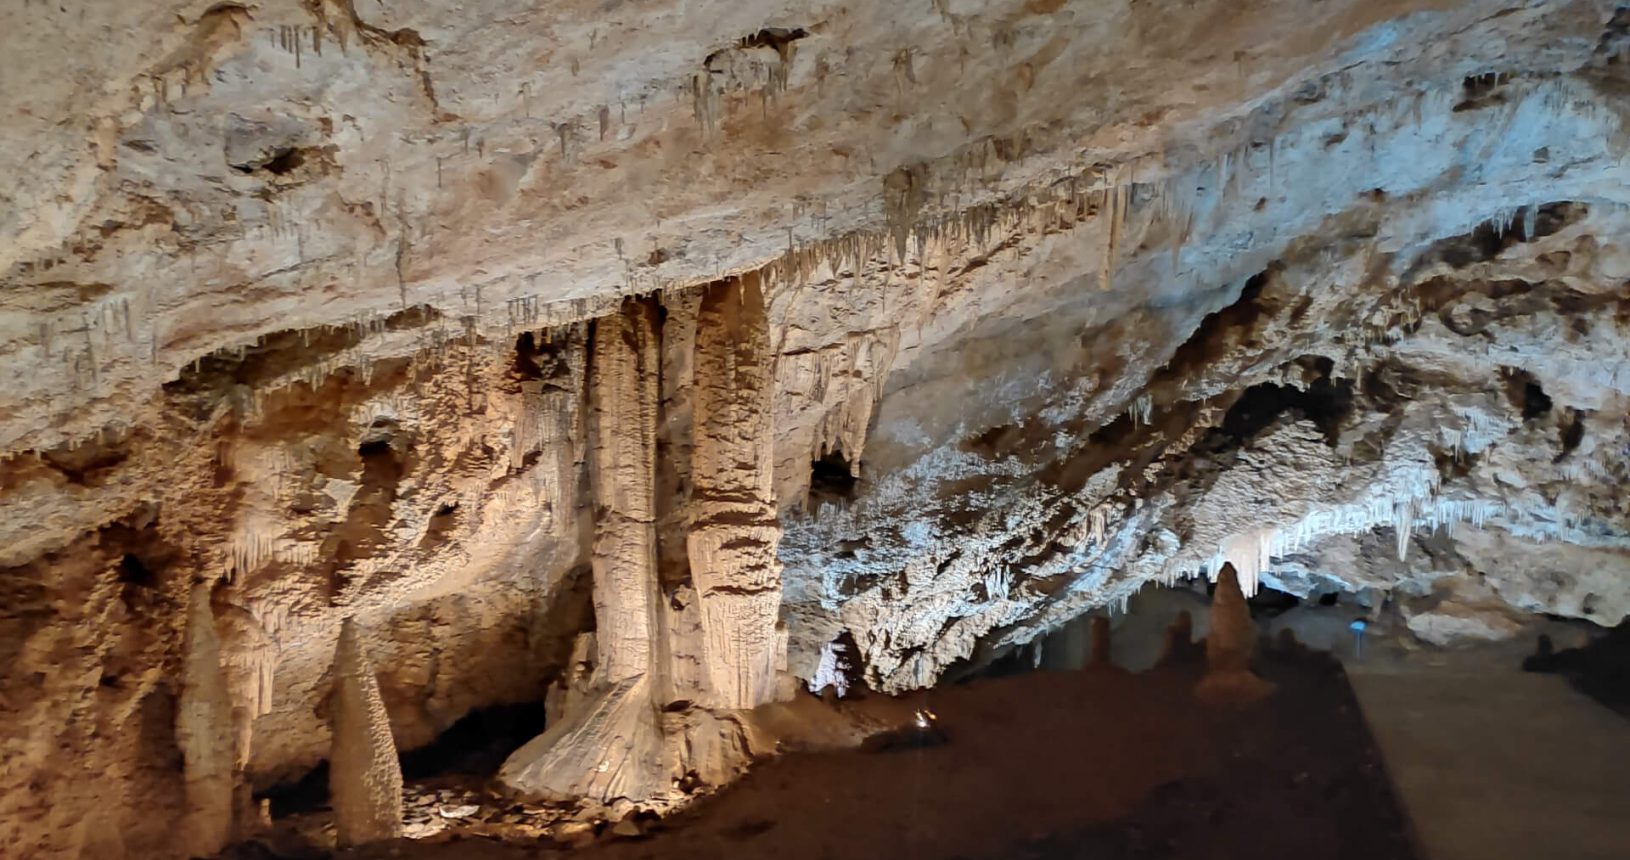 Big stalactites and stalagmites. Lipa Cave